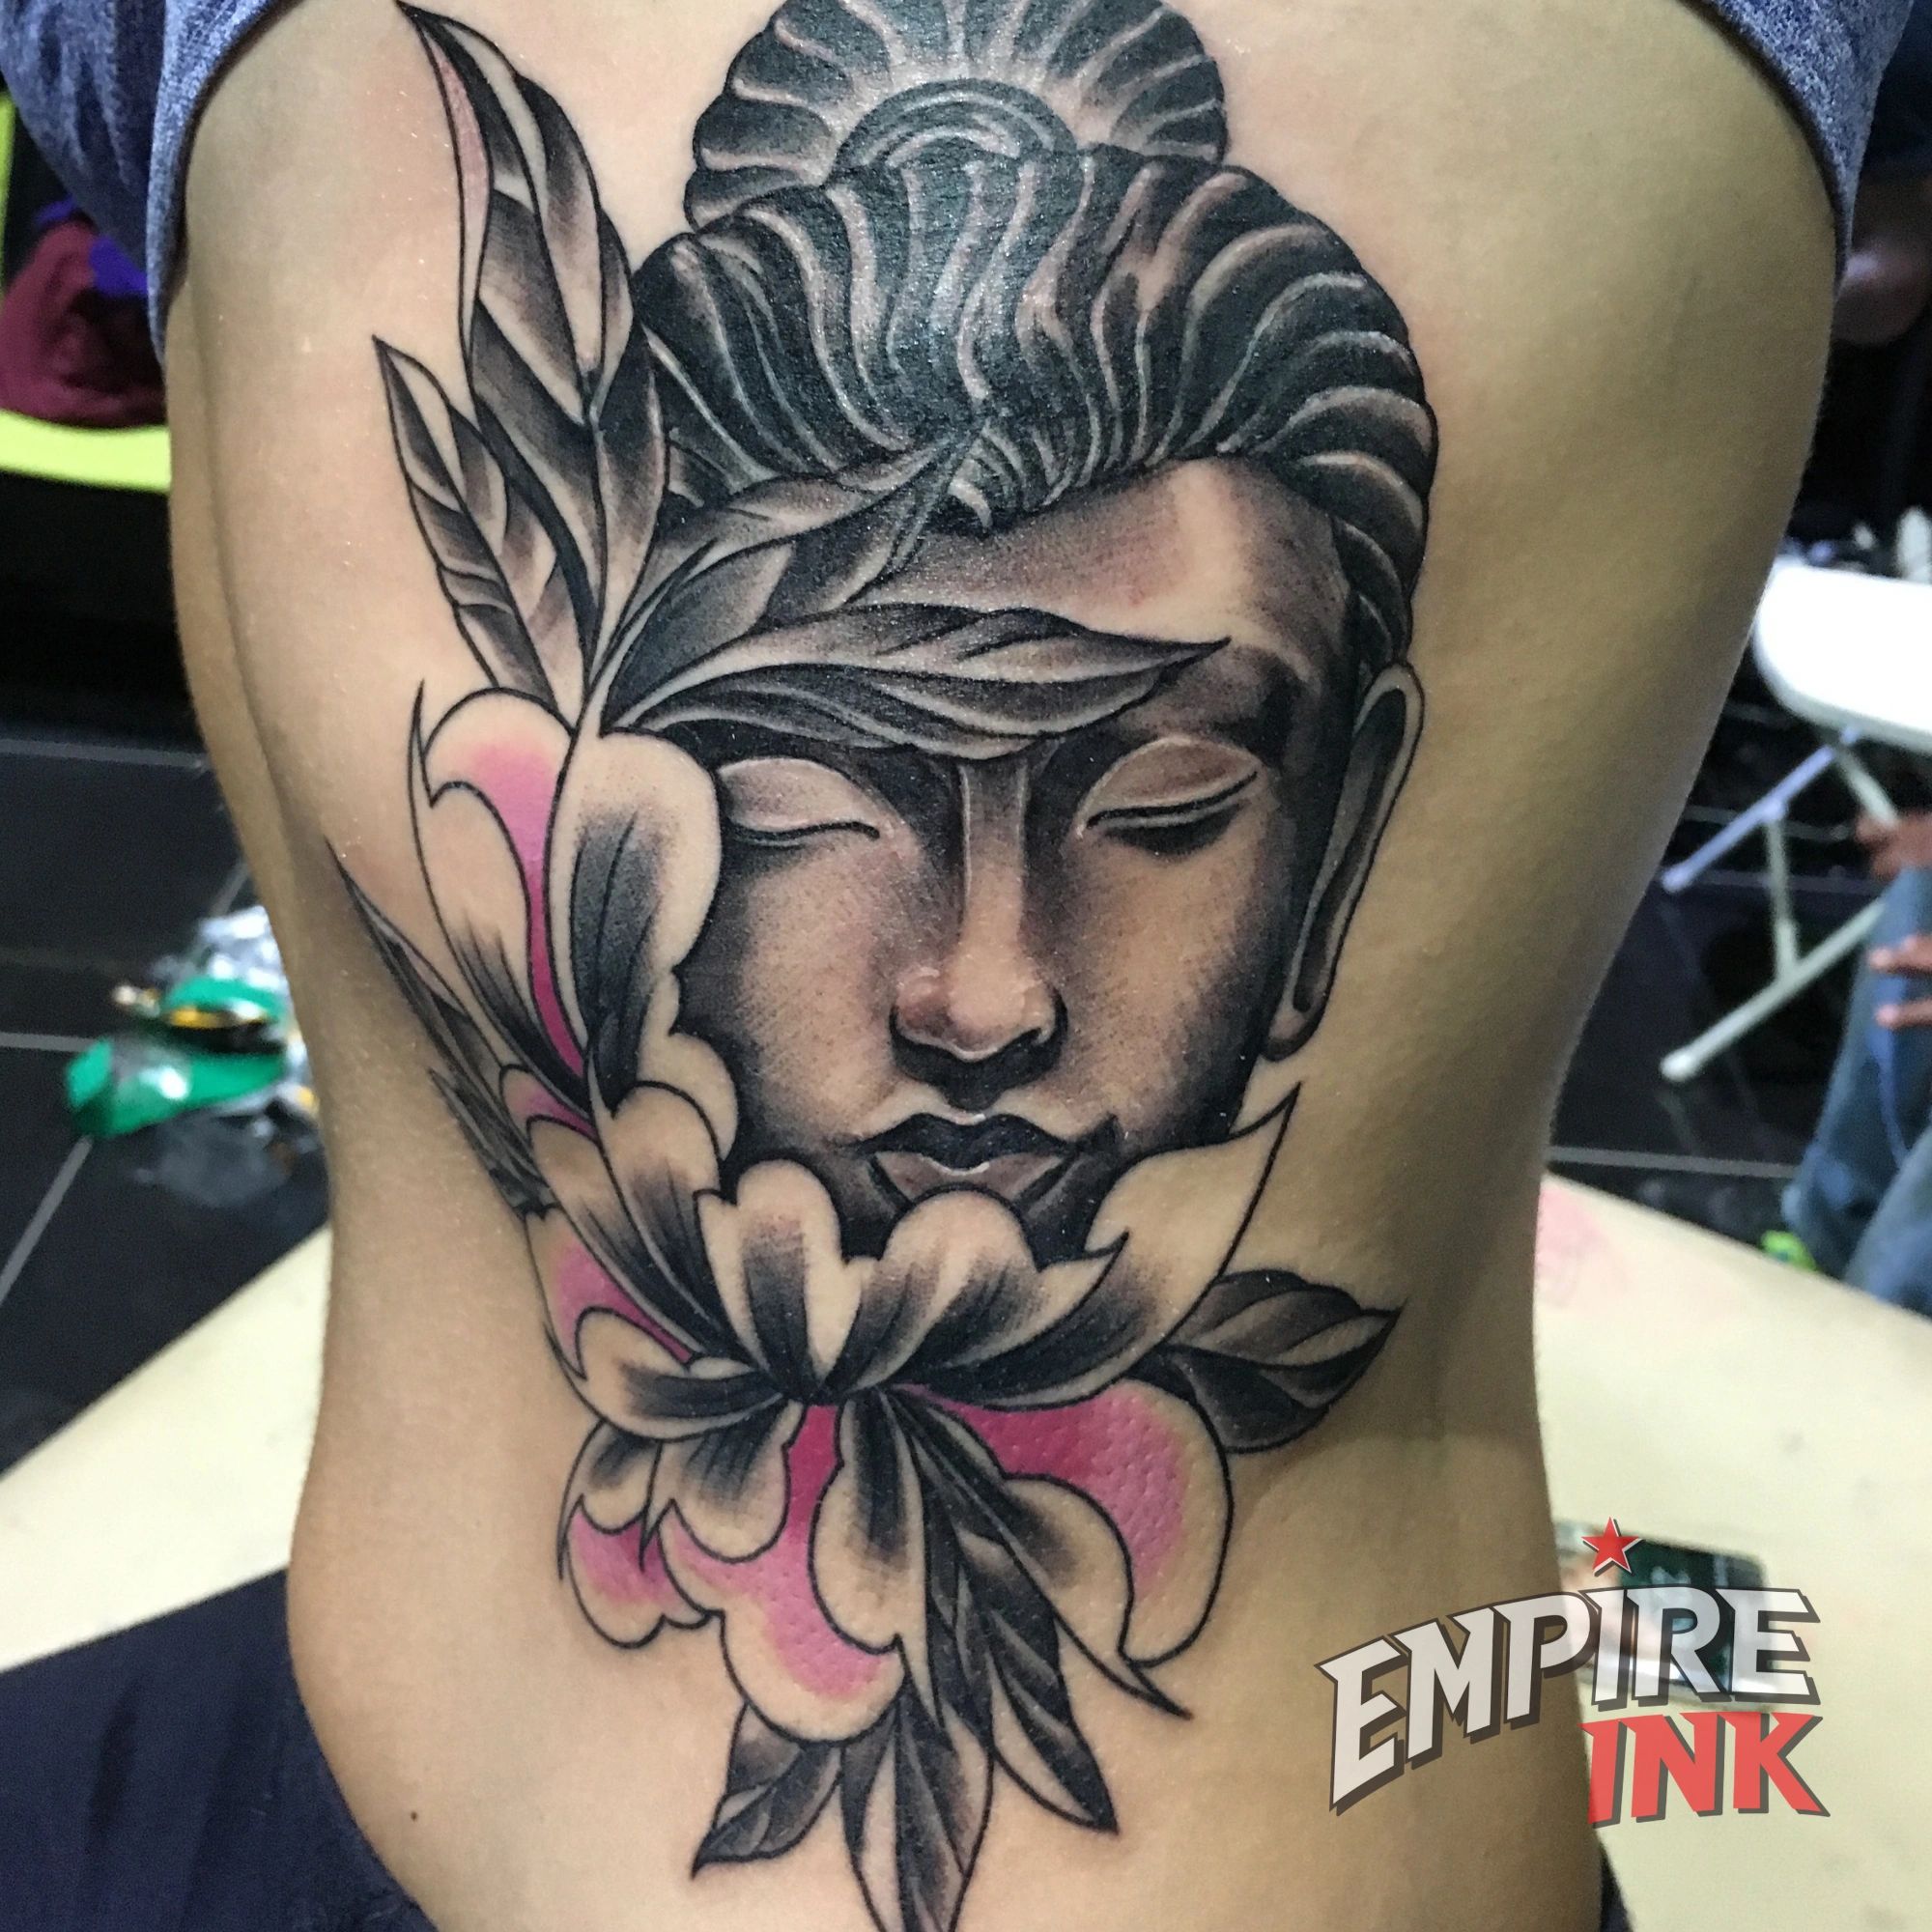 Empire ink tattoo boca